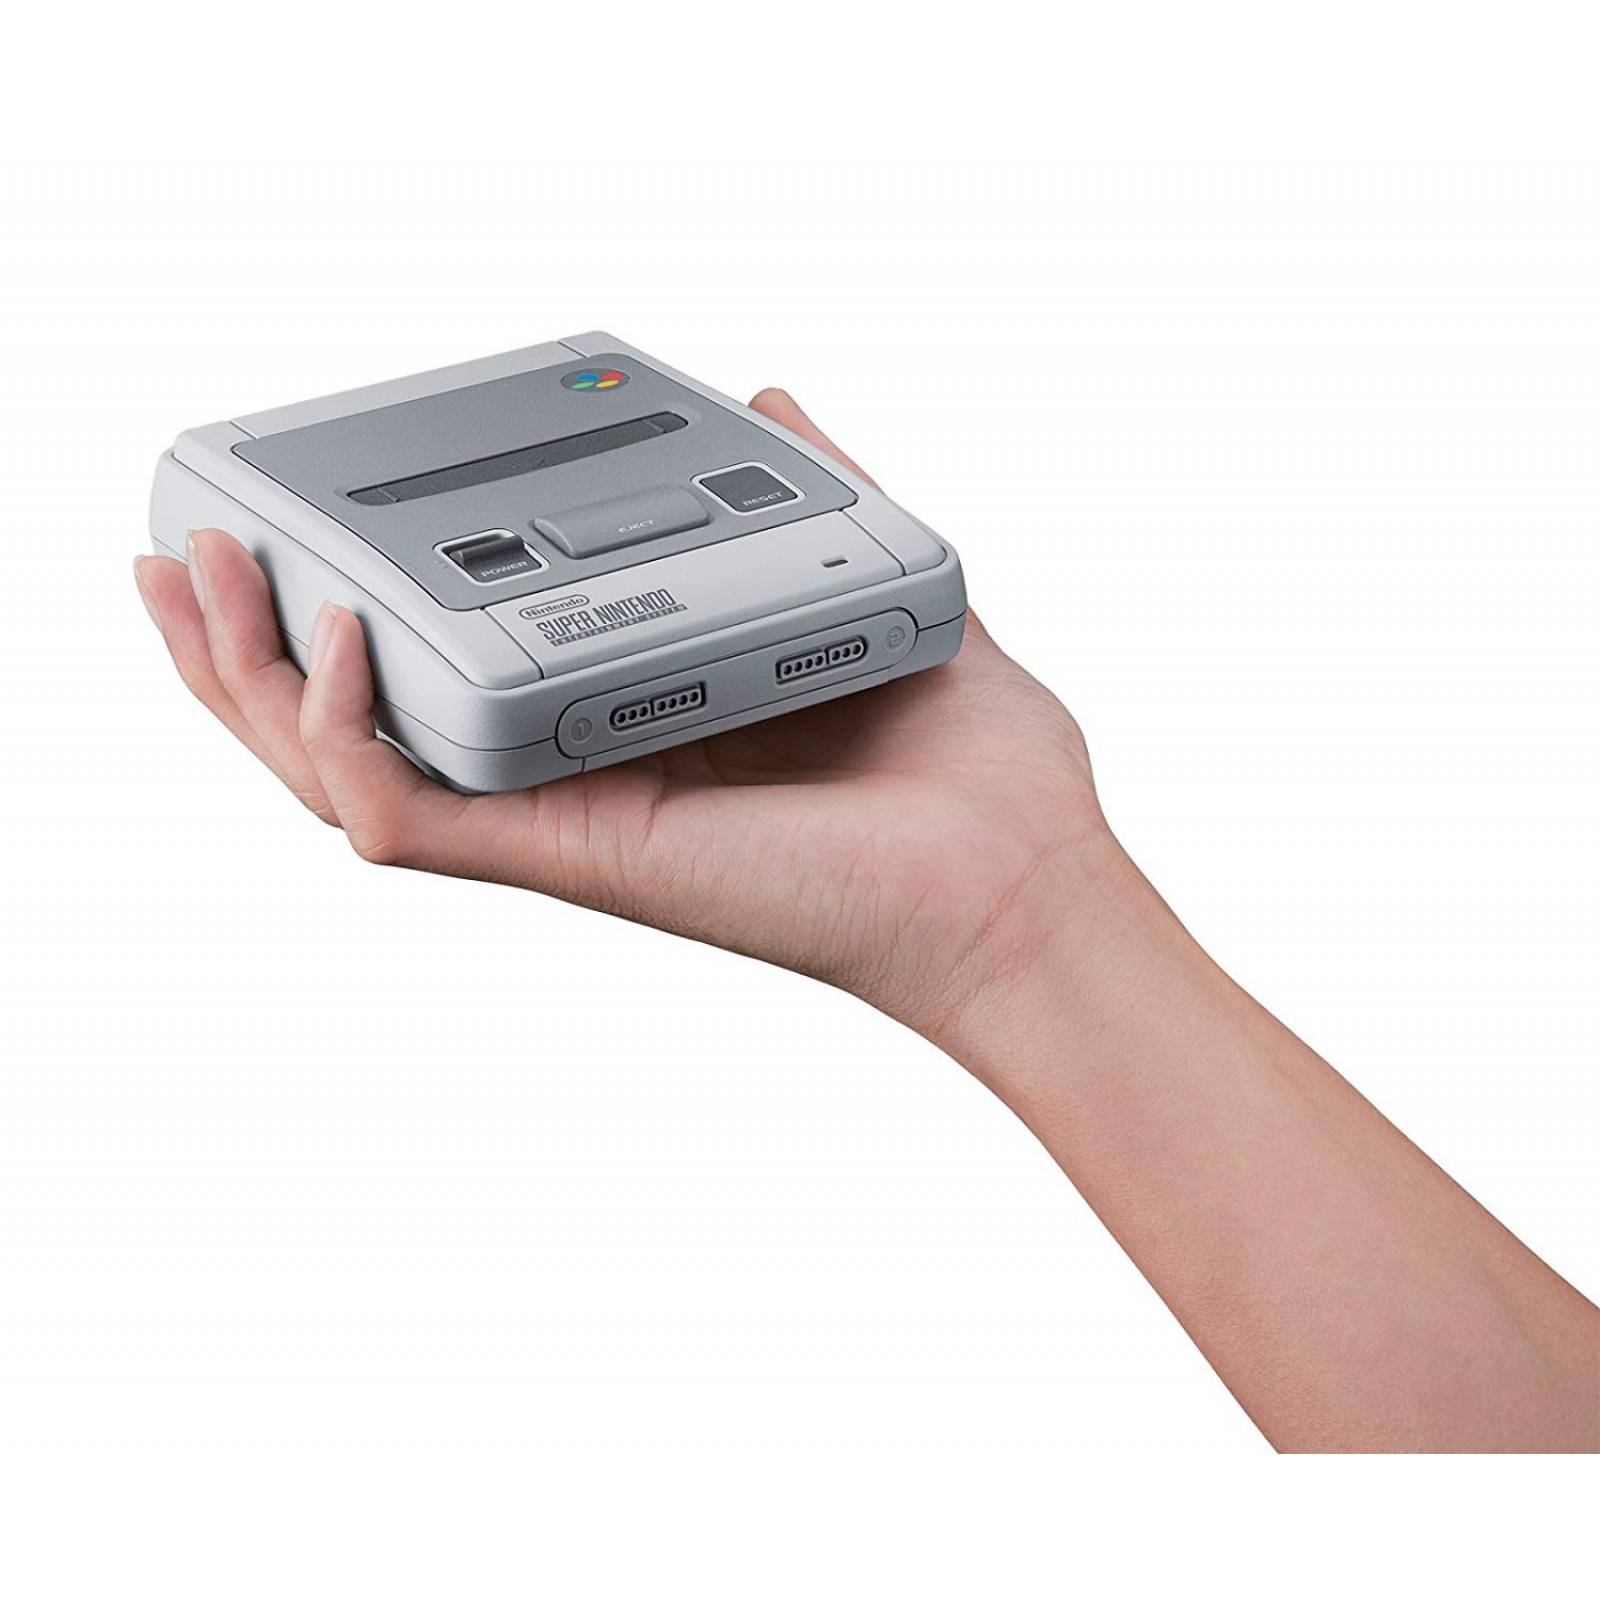 Consola Snes Super Nintendo Classic Slim Mini Europeo Ver. 2